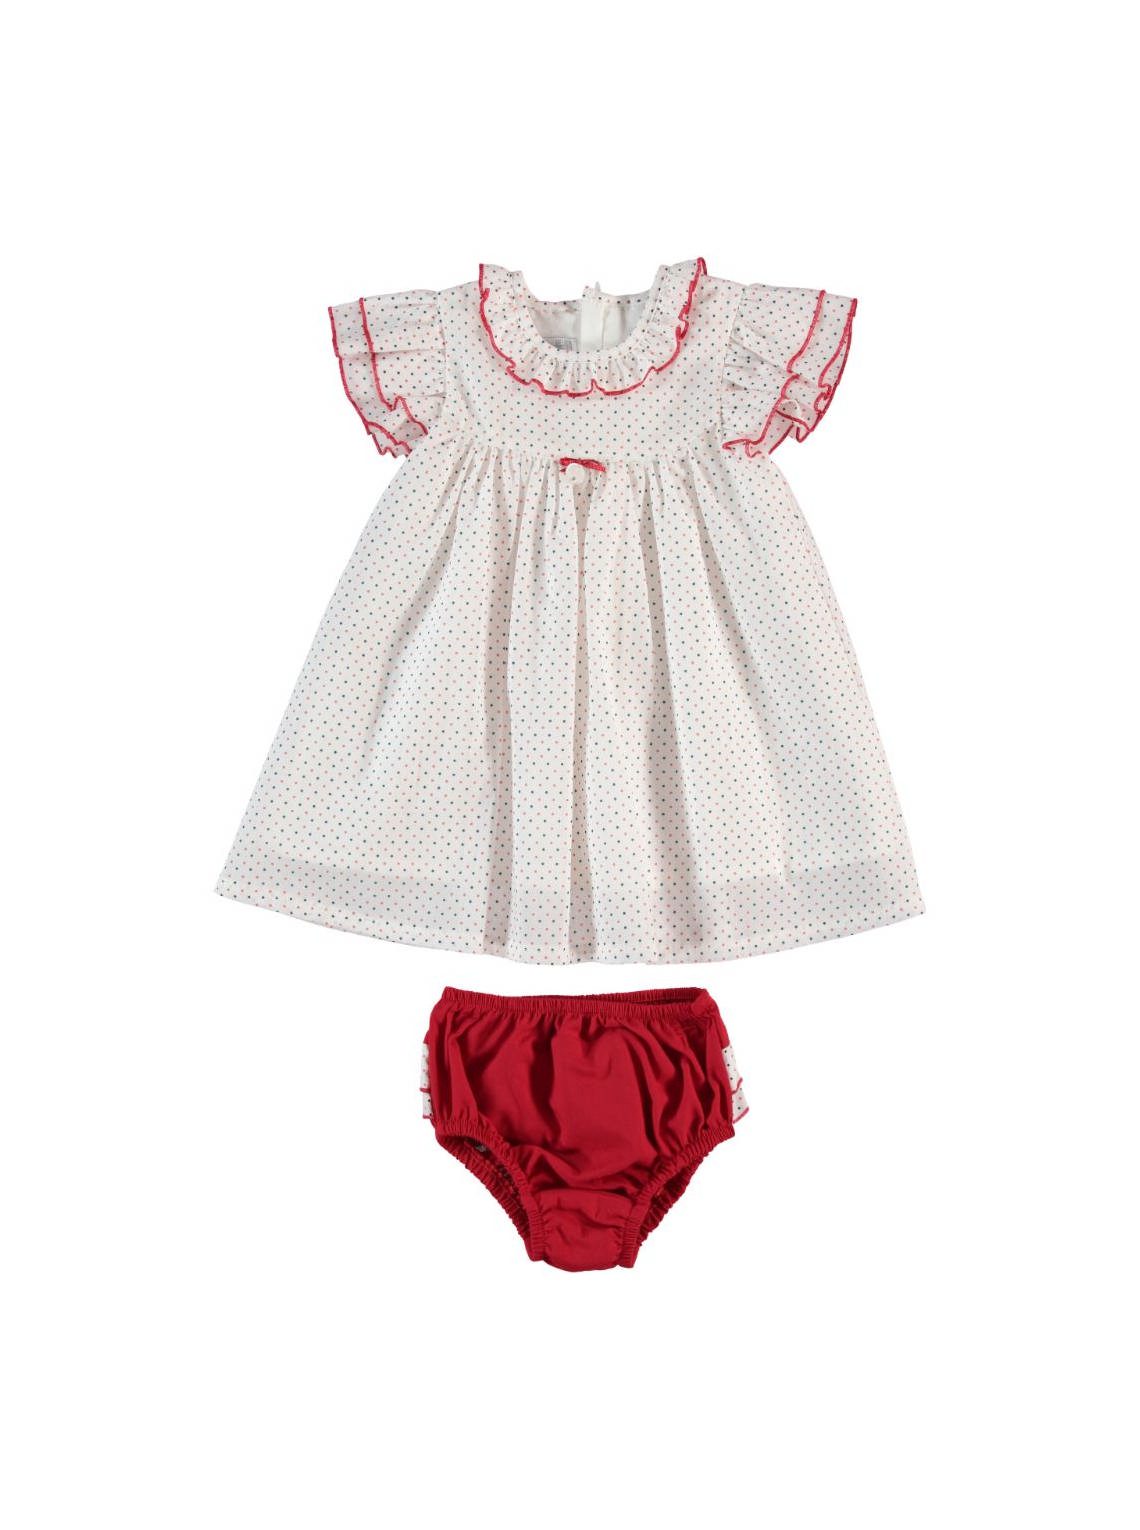 Exclusive Brand - Baby Girl 2 Pieces Dress Set / 9M | 12M | 18M | 24M - Kids Fashion Turkey